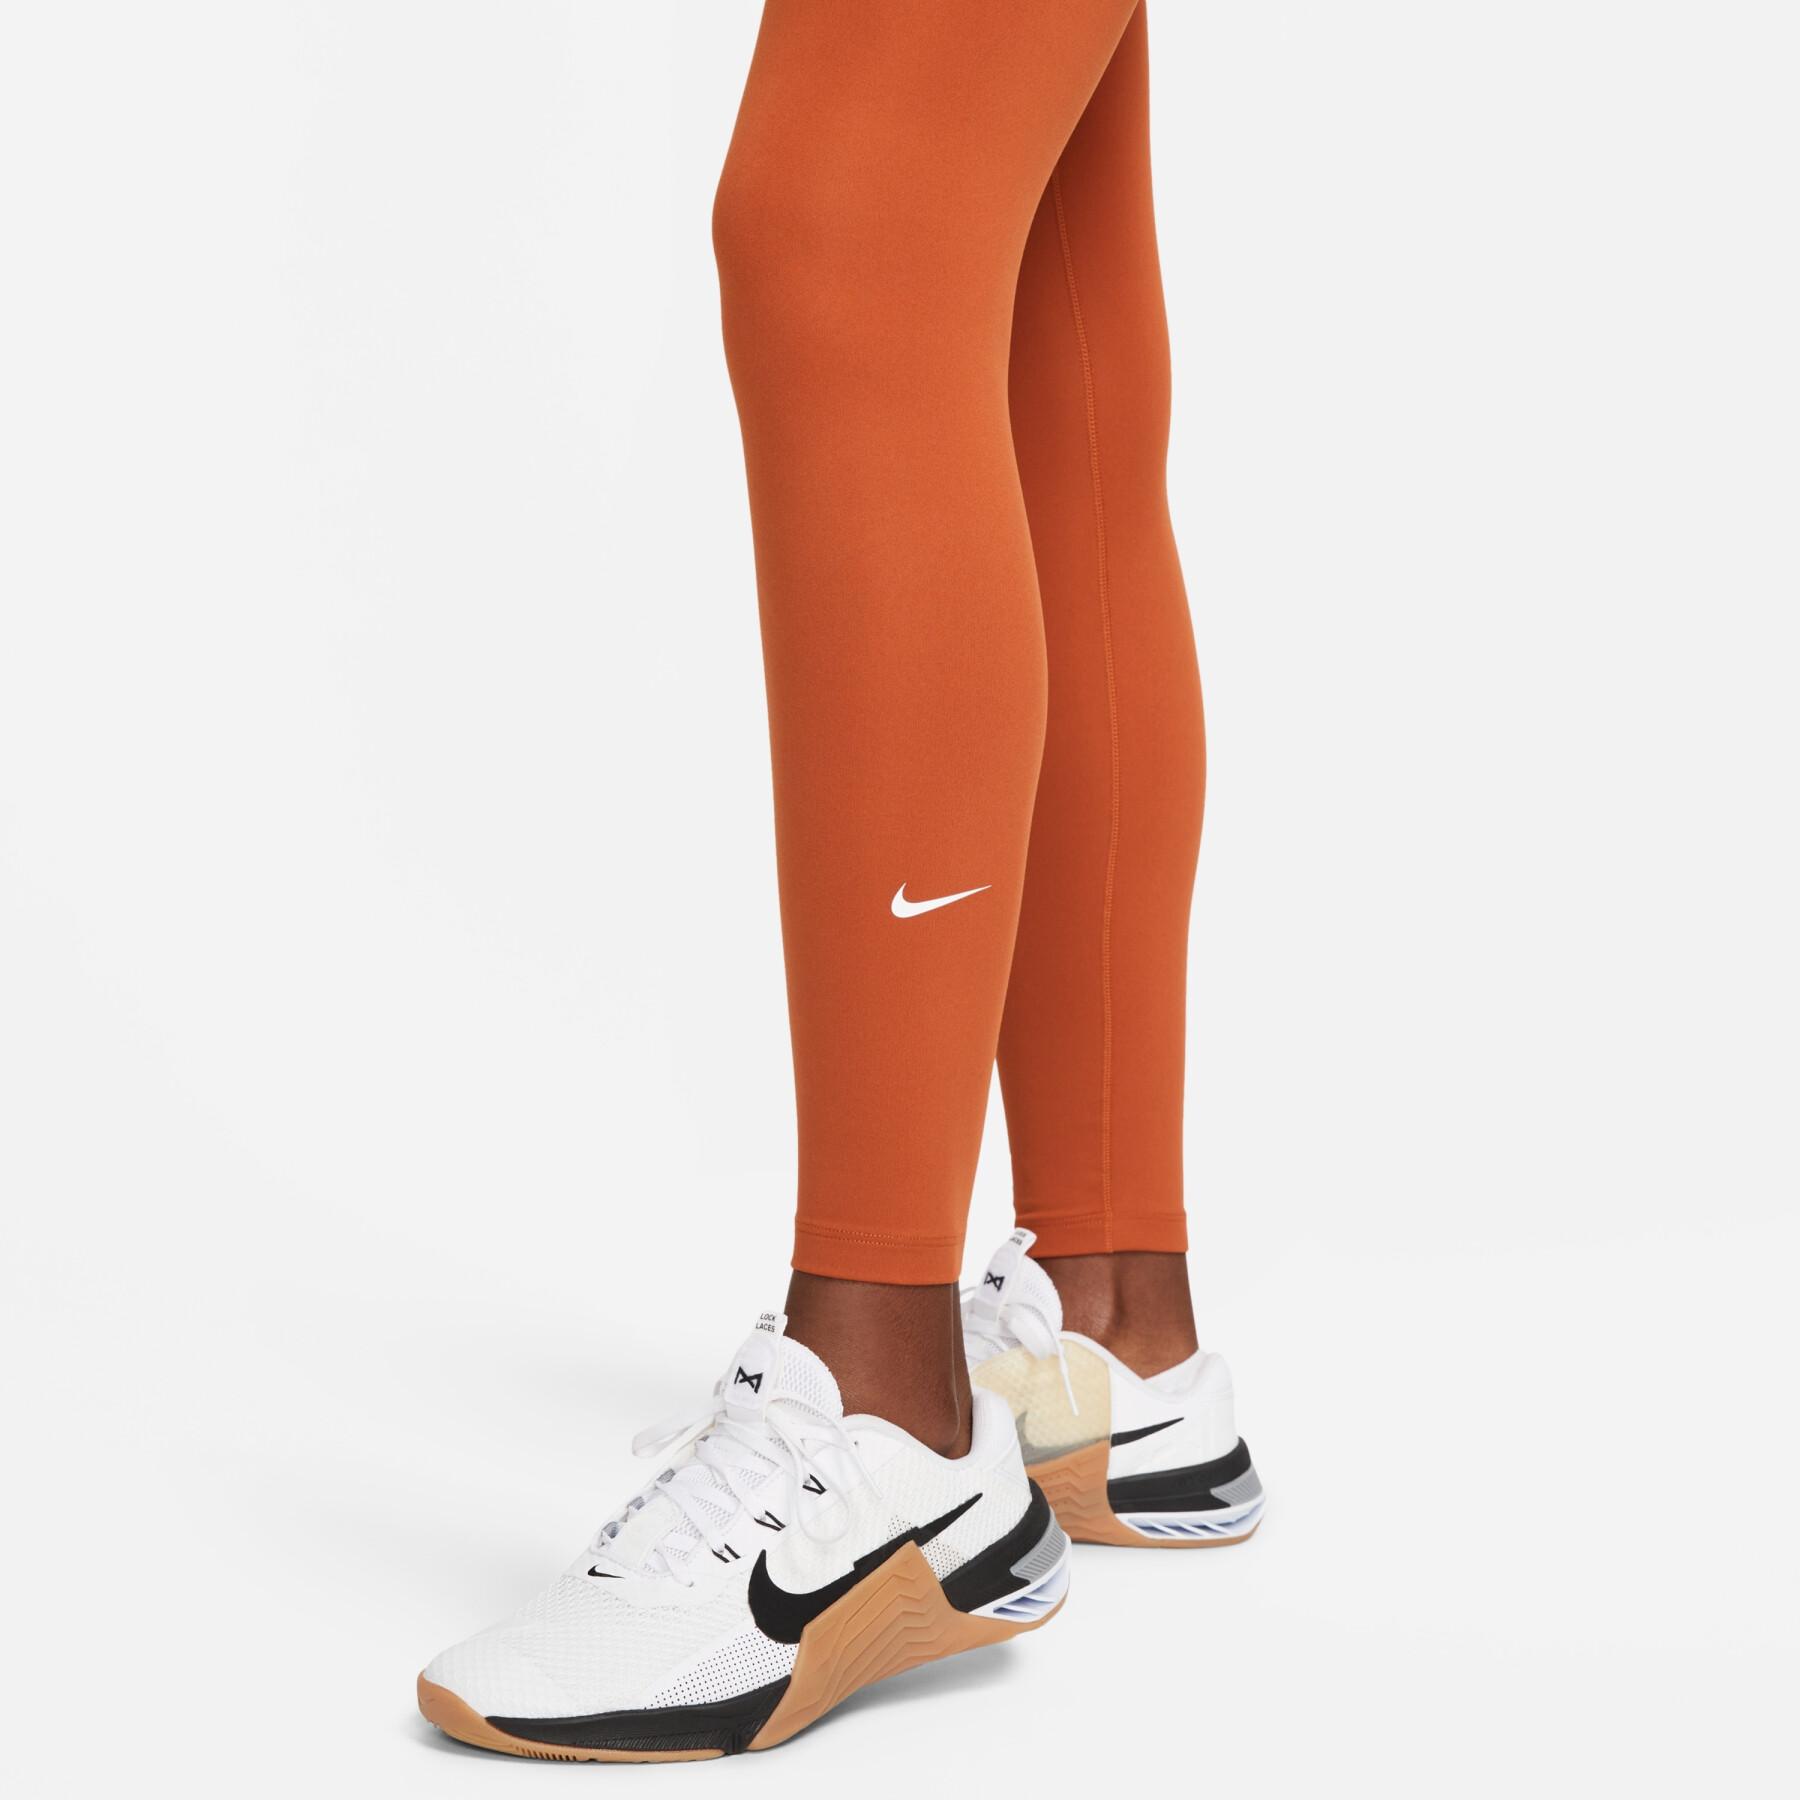 Legging high waist woman Nike One Dri-FIT - Leggings - Women's clothing -  Fitness